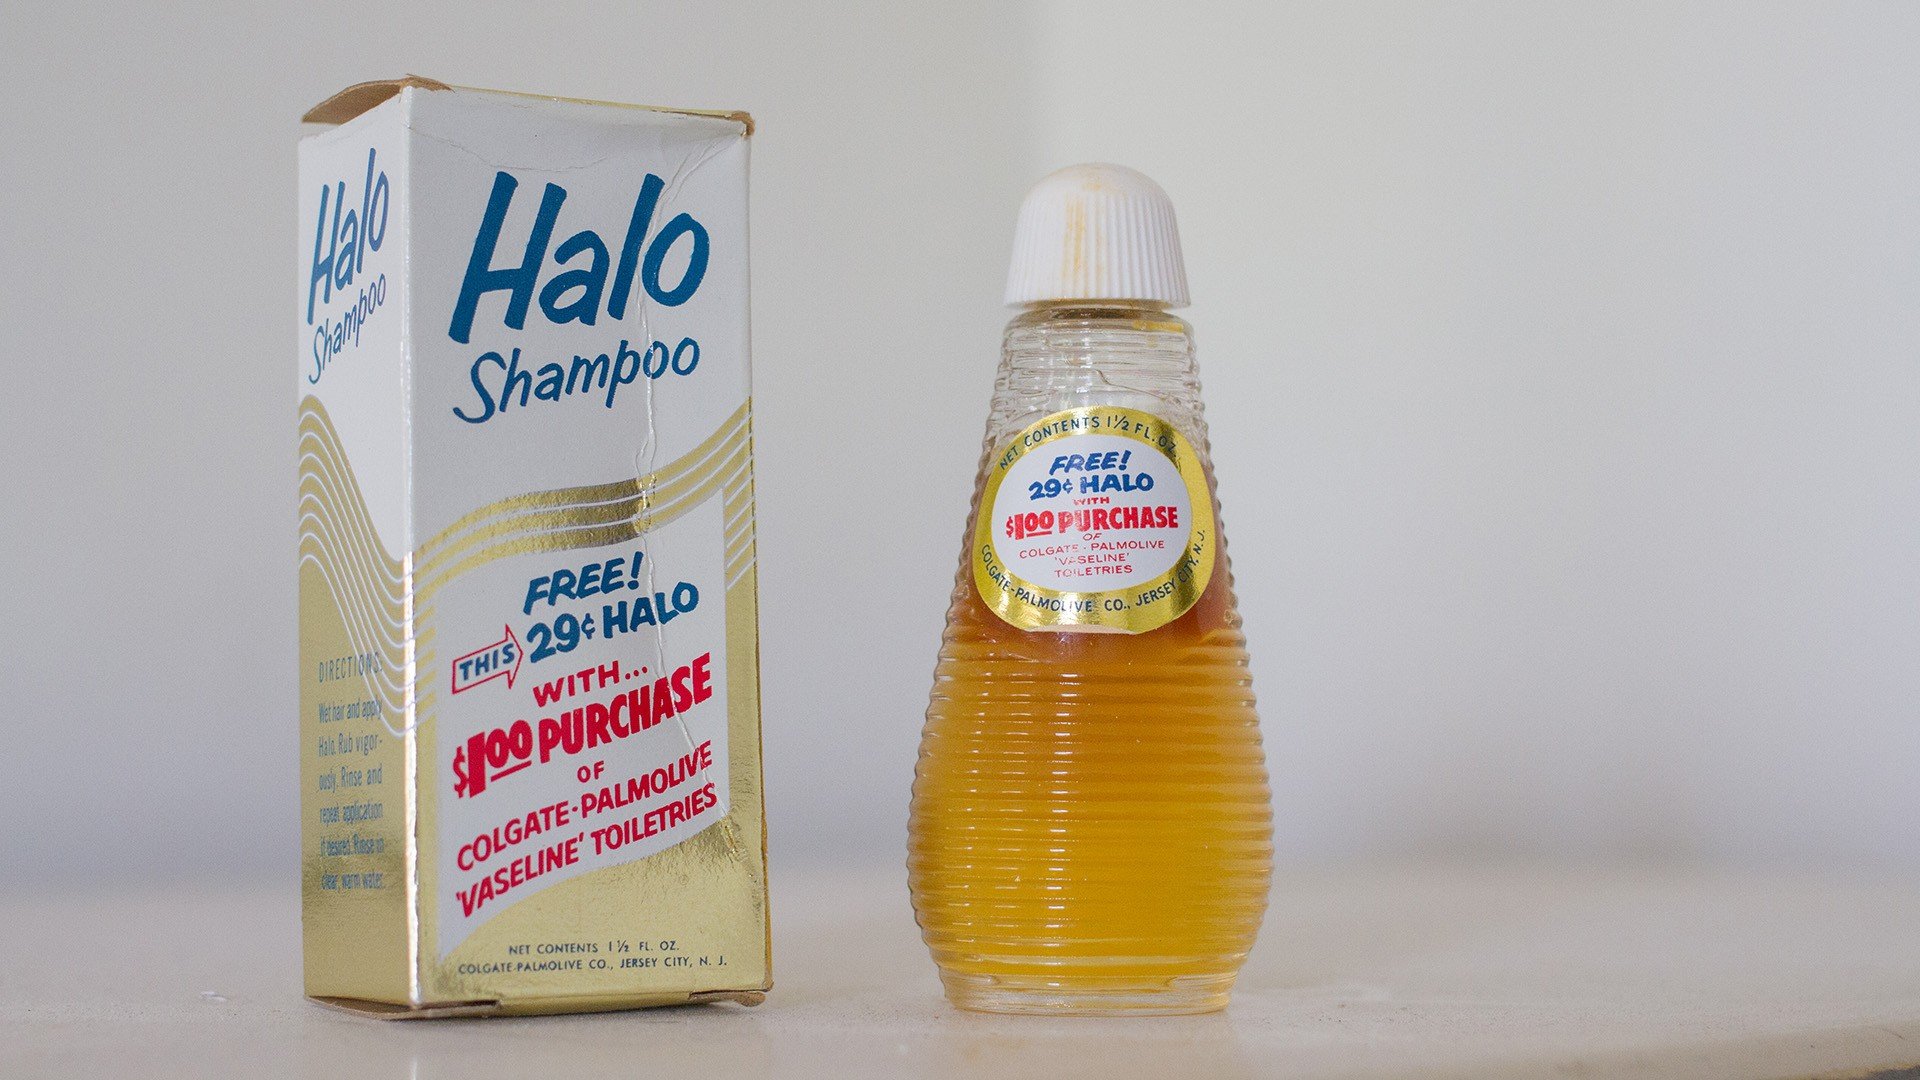 Halo Shampoo packing and bottle.